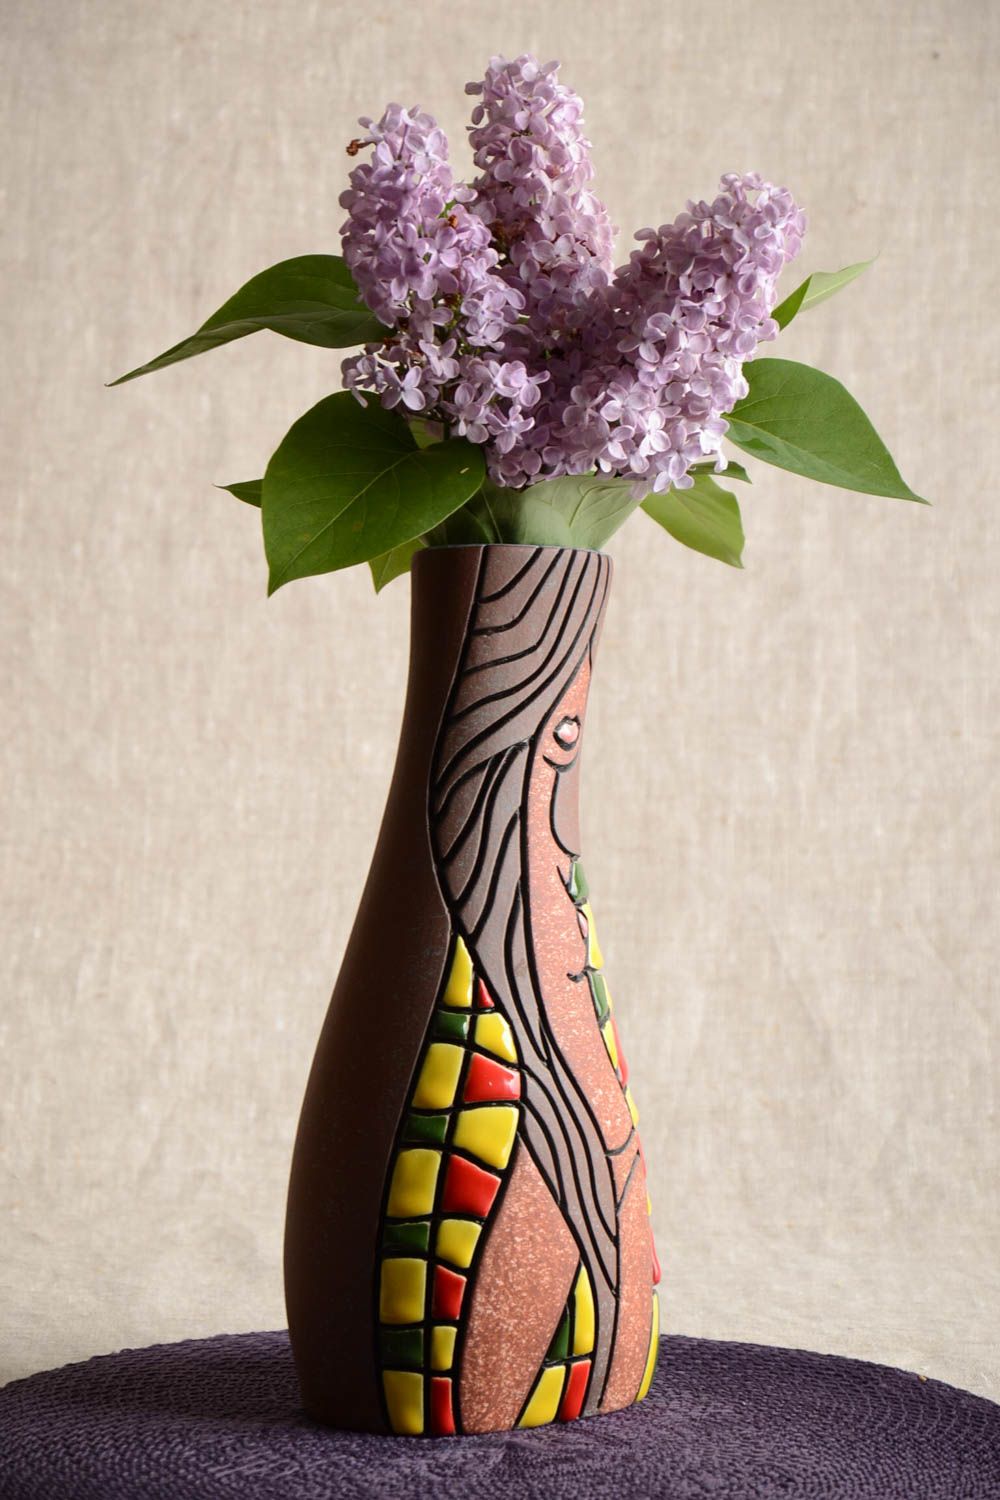 50 oz ceramic vase for home décor 2,16 lb photo 1